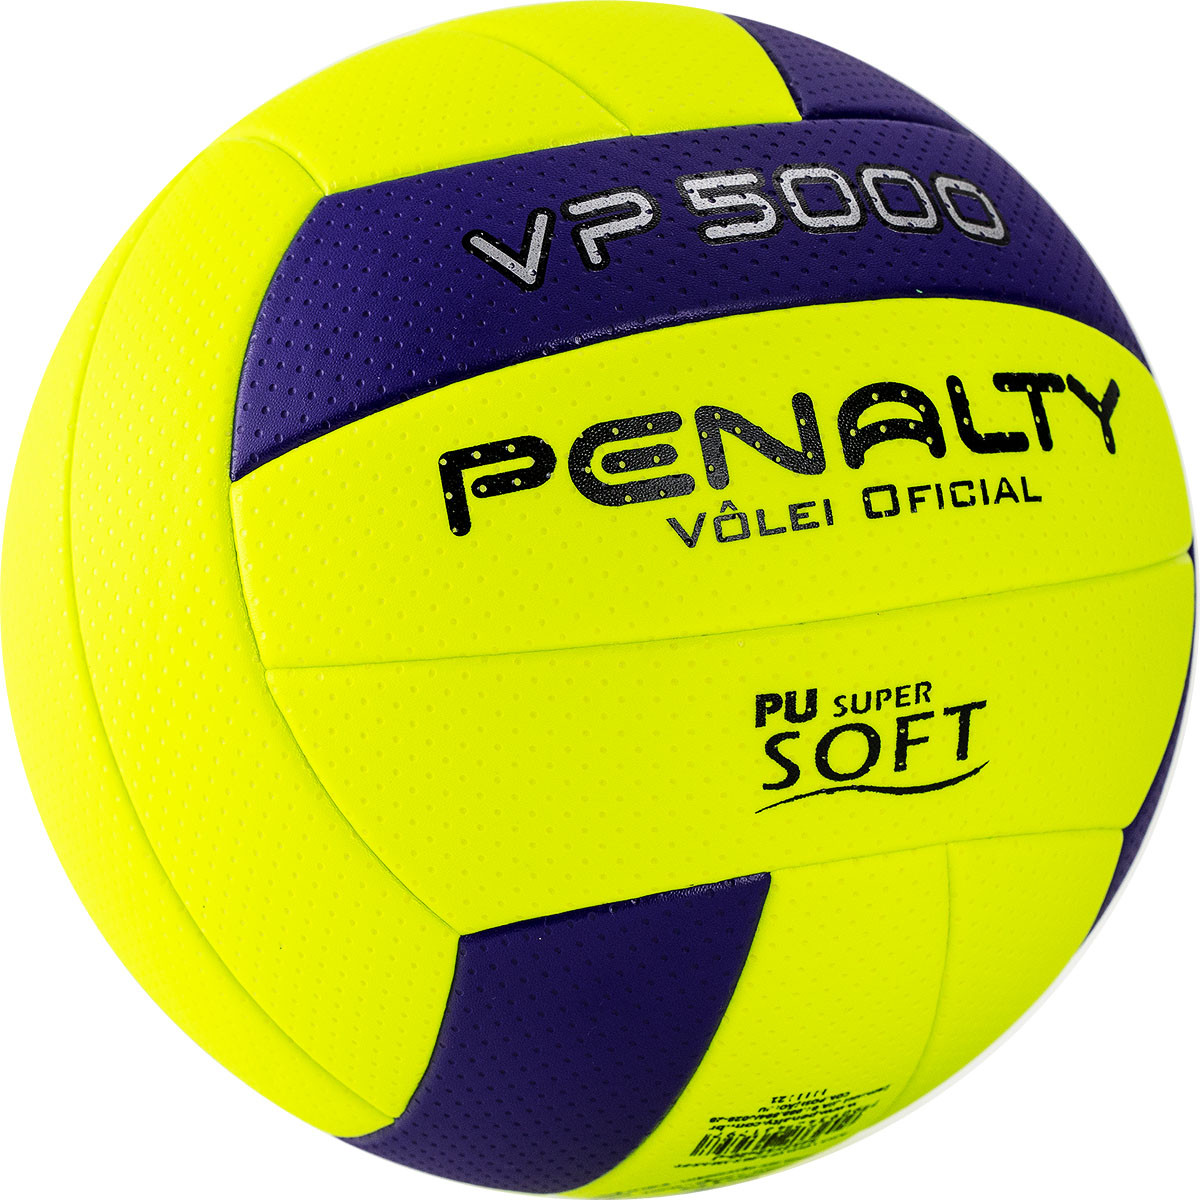 Мяч вол. PENALTY BOLA VOLEI VP 5000 X, арт.5212712420-U, р.5, PU, термосшивка, желт-фиол